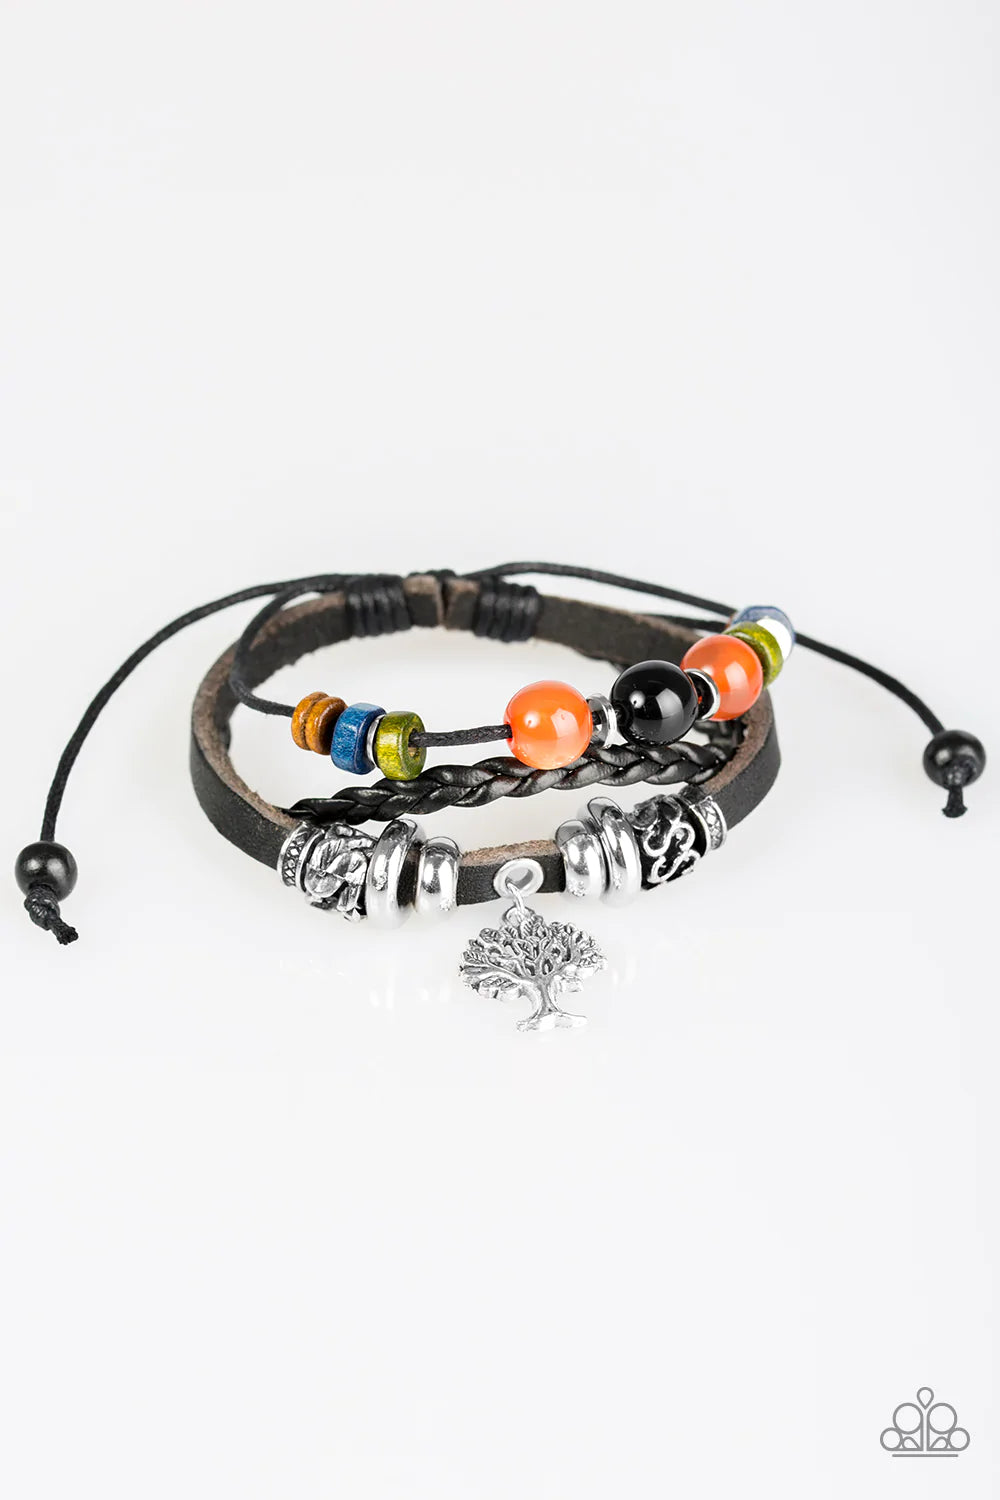 Mystery Bracelet Bags – Agapi and Zoe Inc